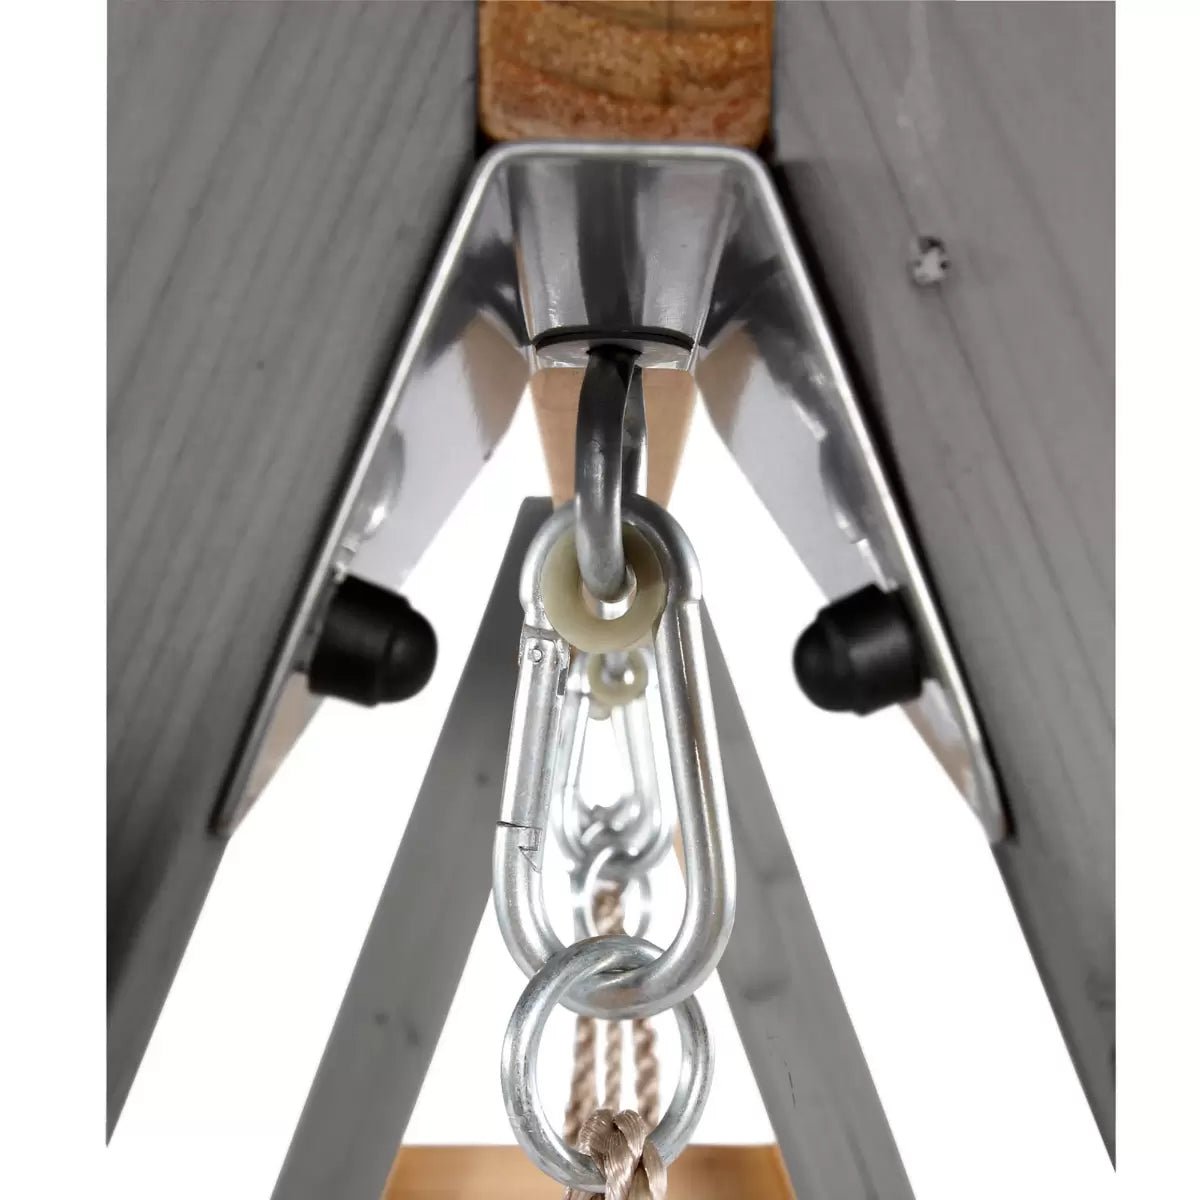 Plum Tamarin Wooden Swing Set - Swing Anchor clips